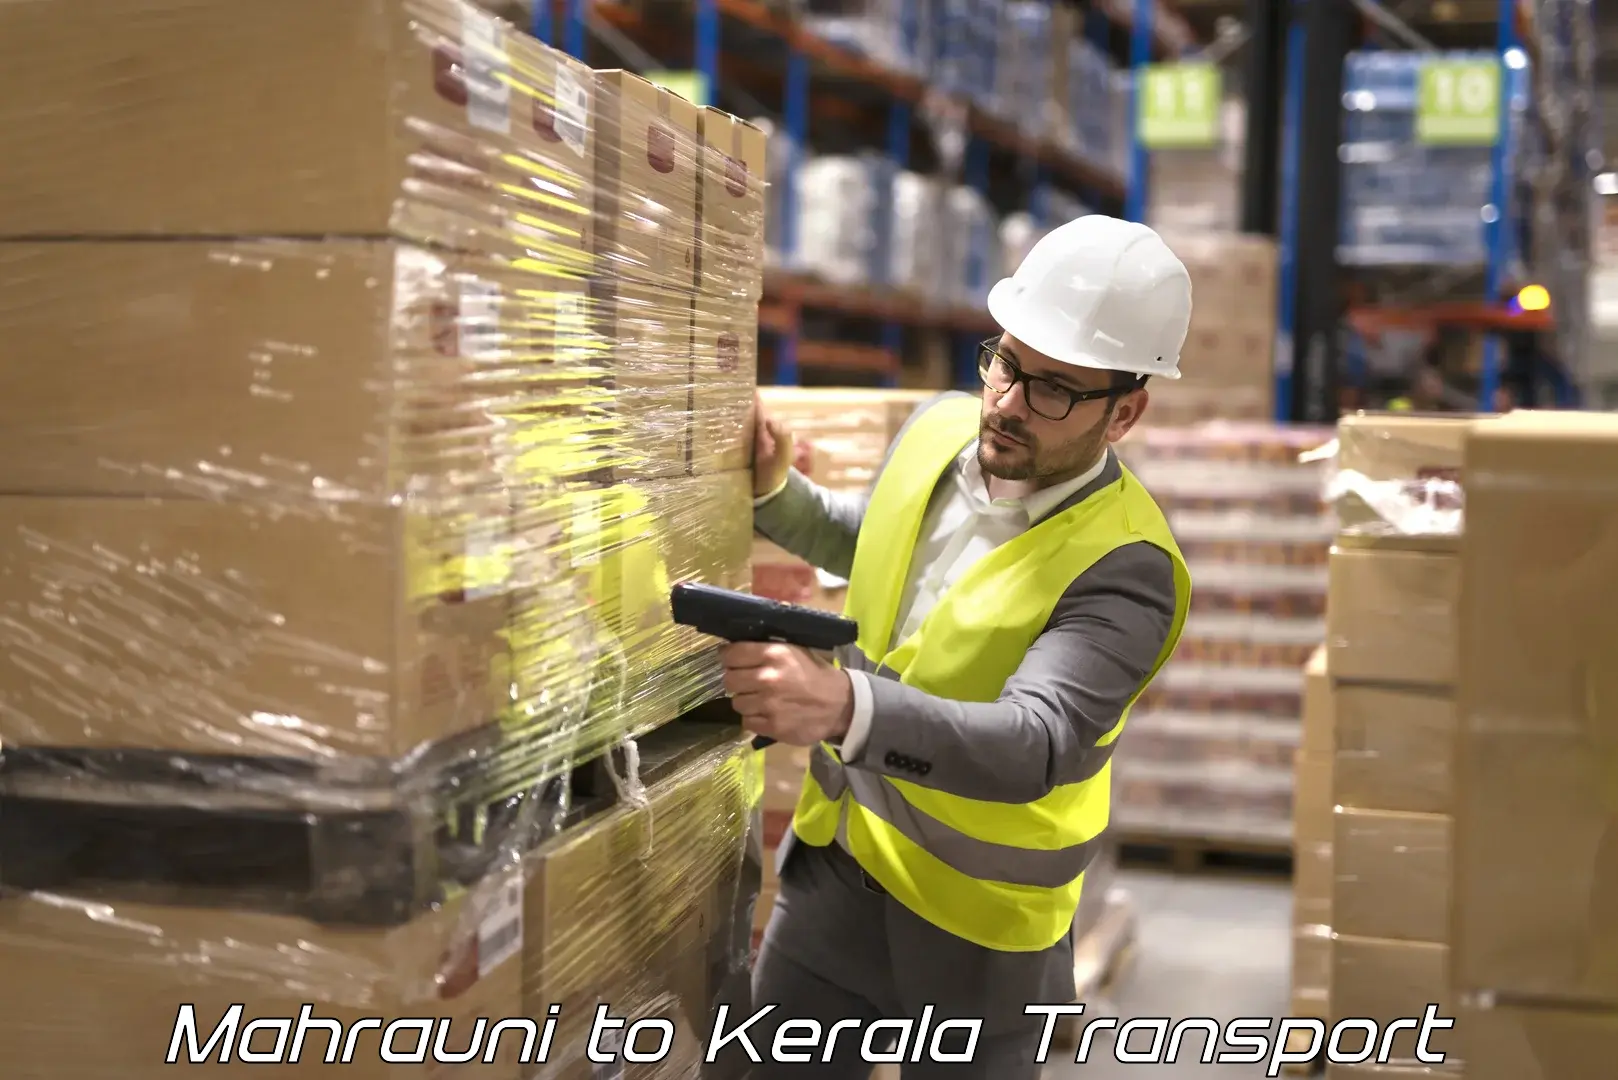 Air cargo transport services Mahrauni to Kochi